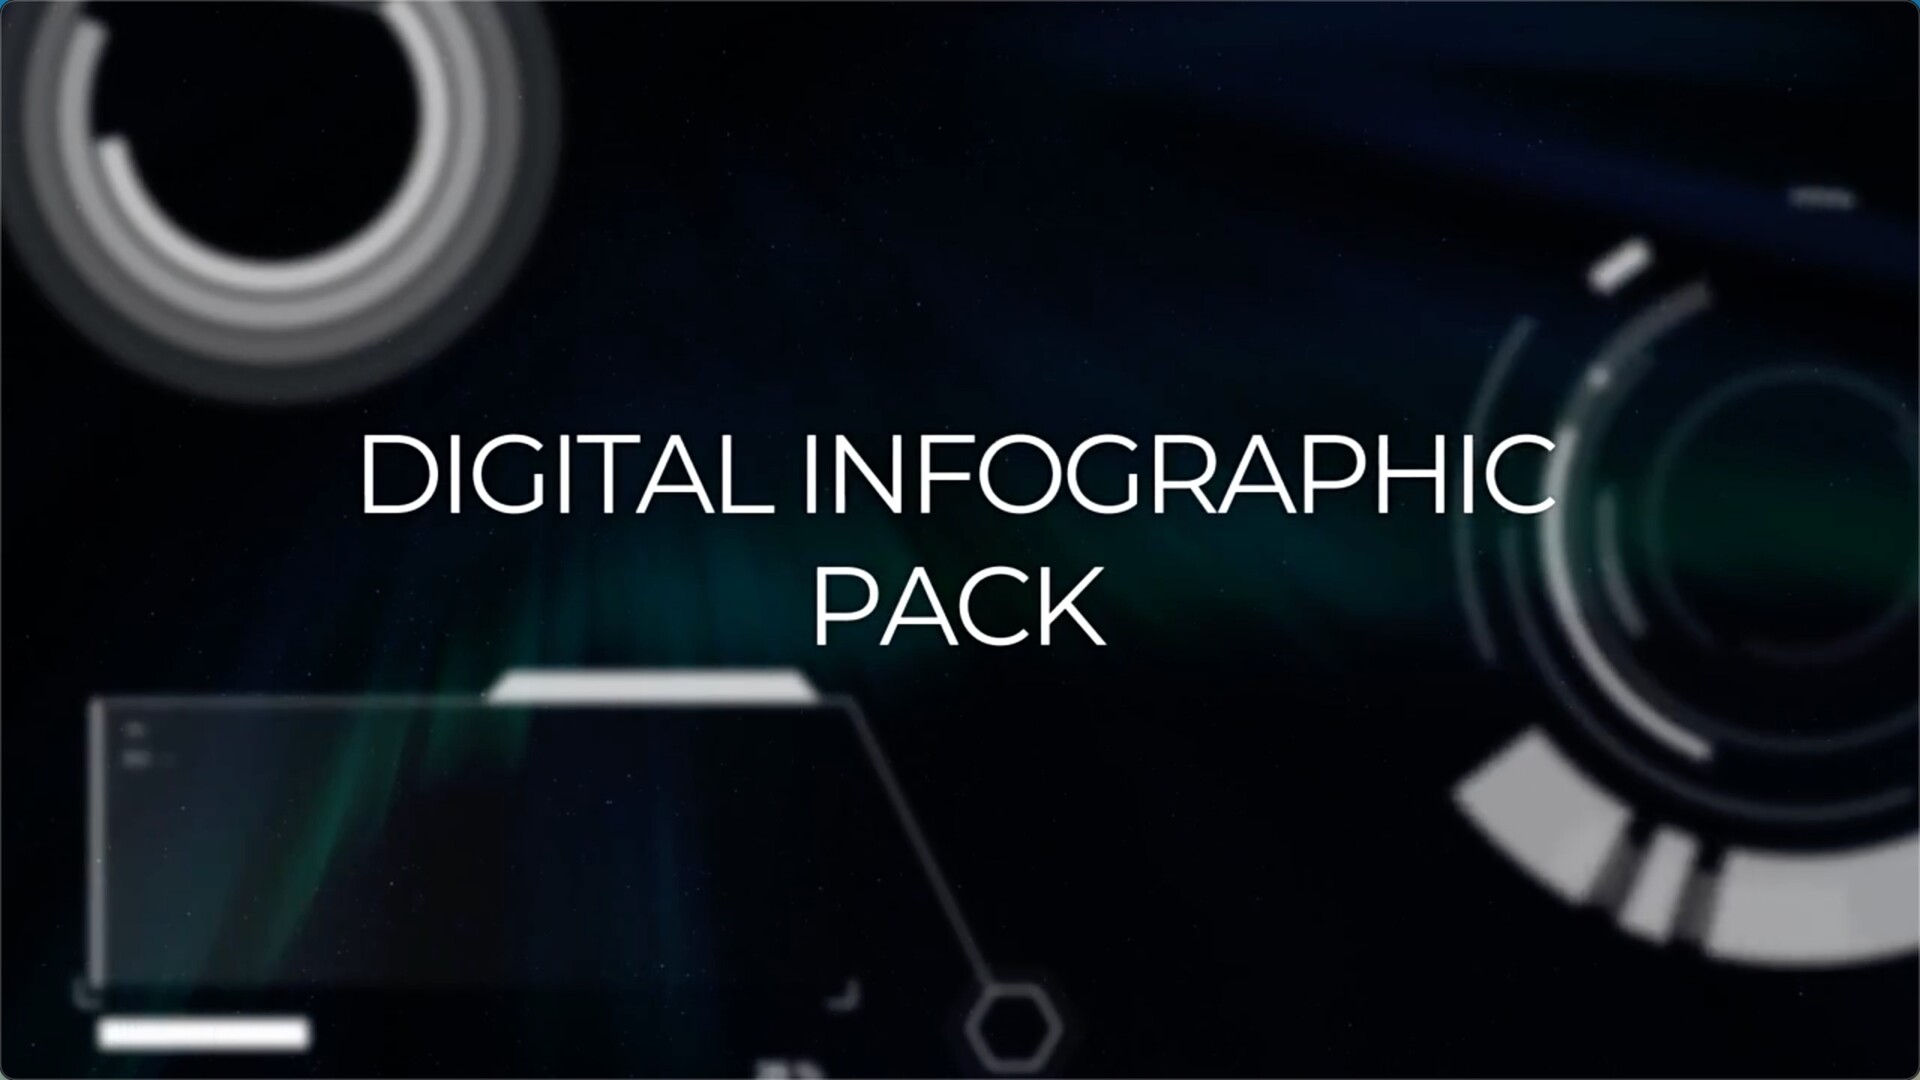 FCPX插件-26个未来数字科技UI界面HUD动画元素 Digital Infographic